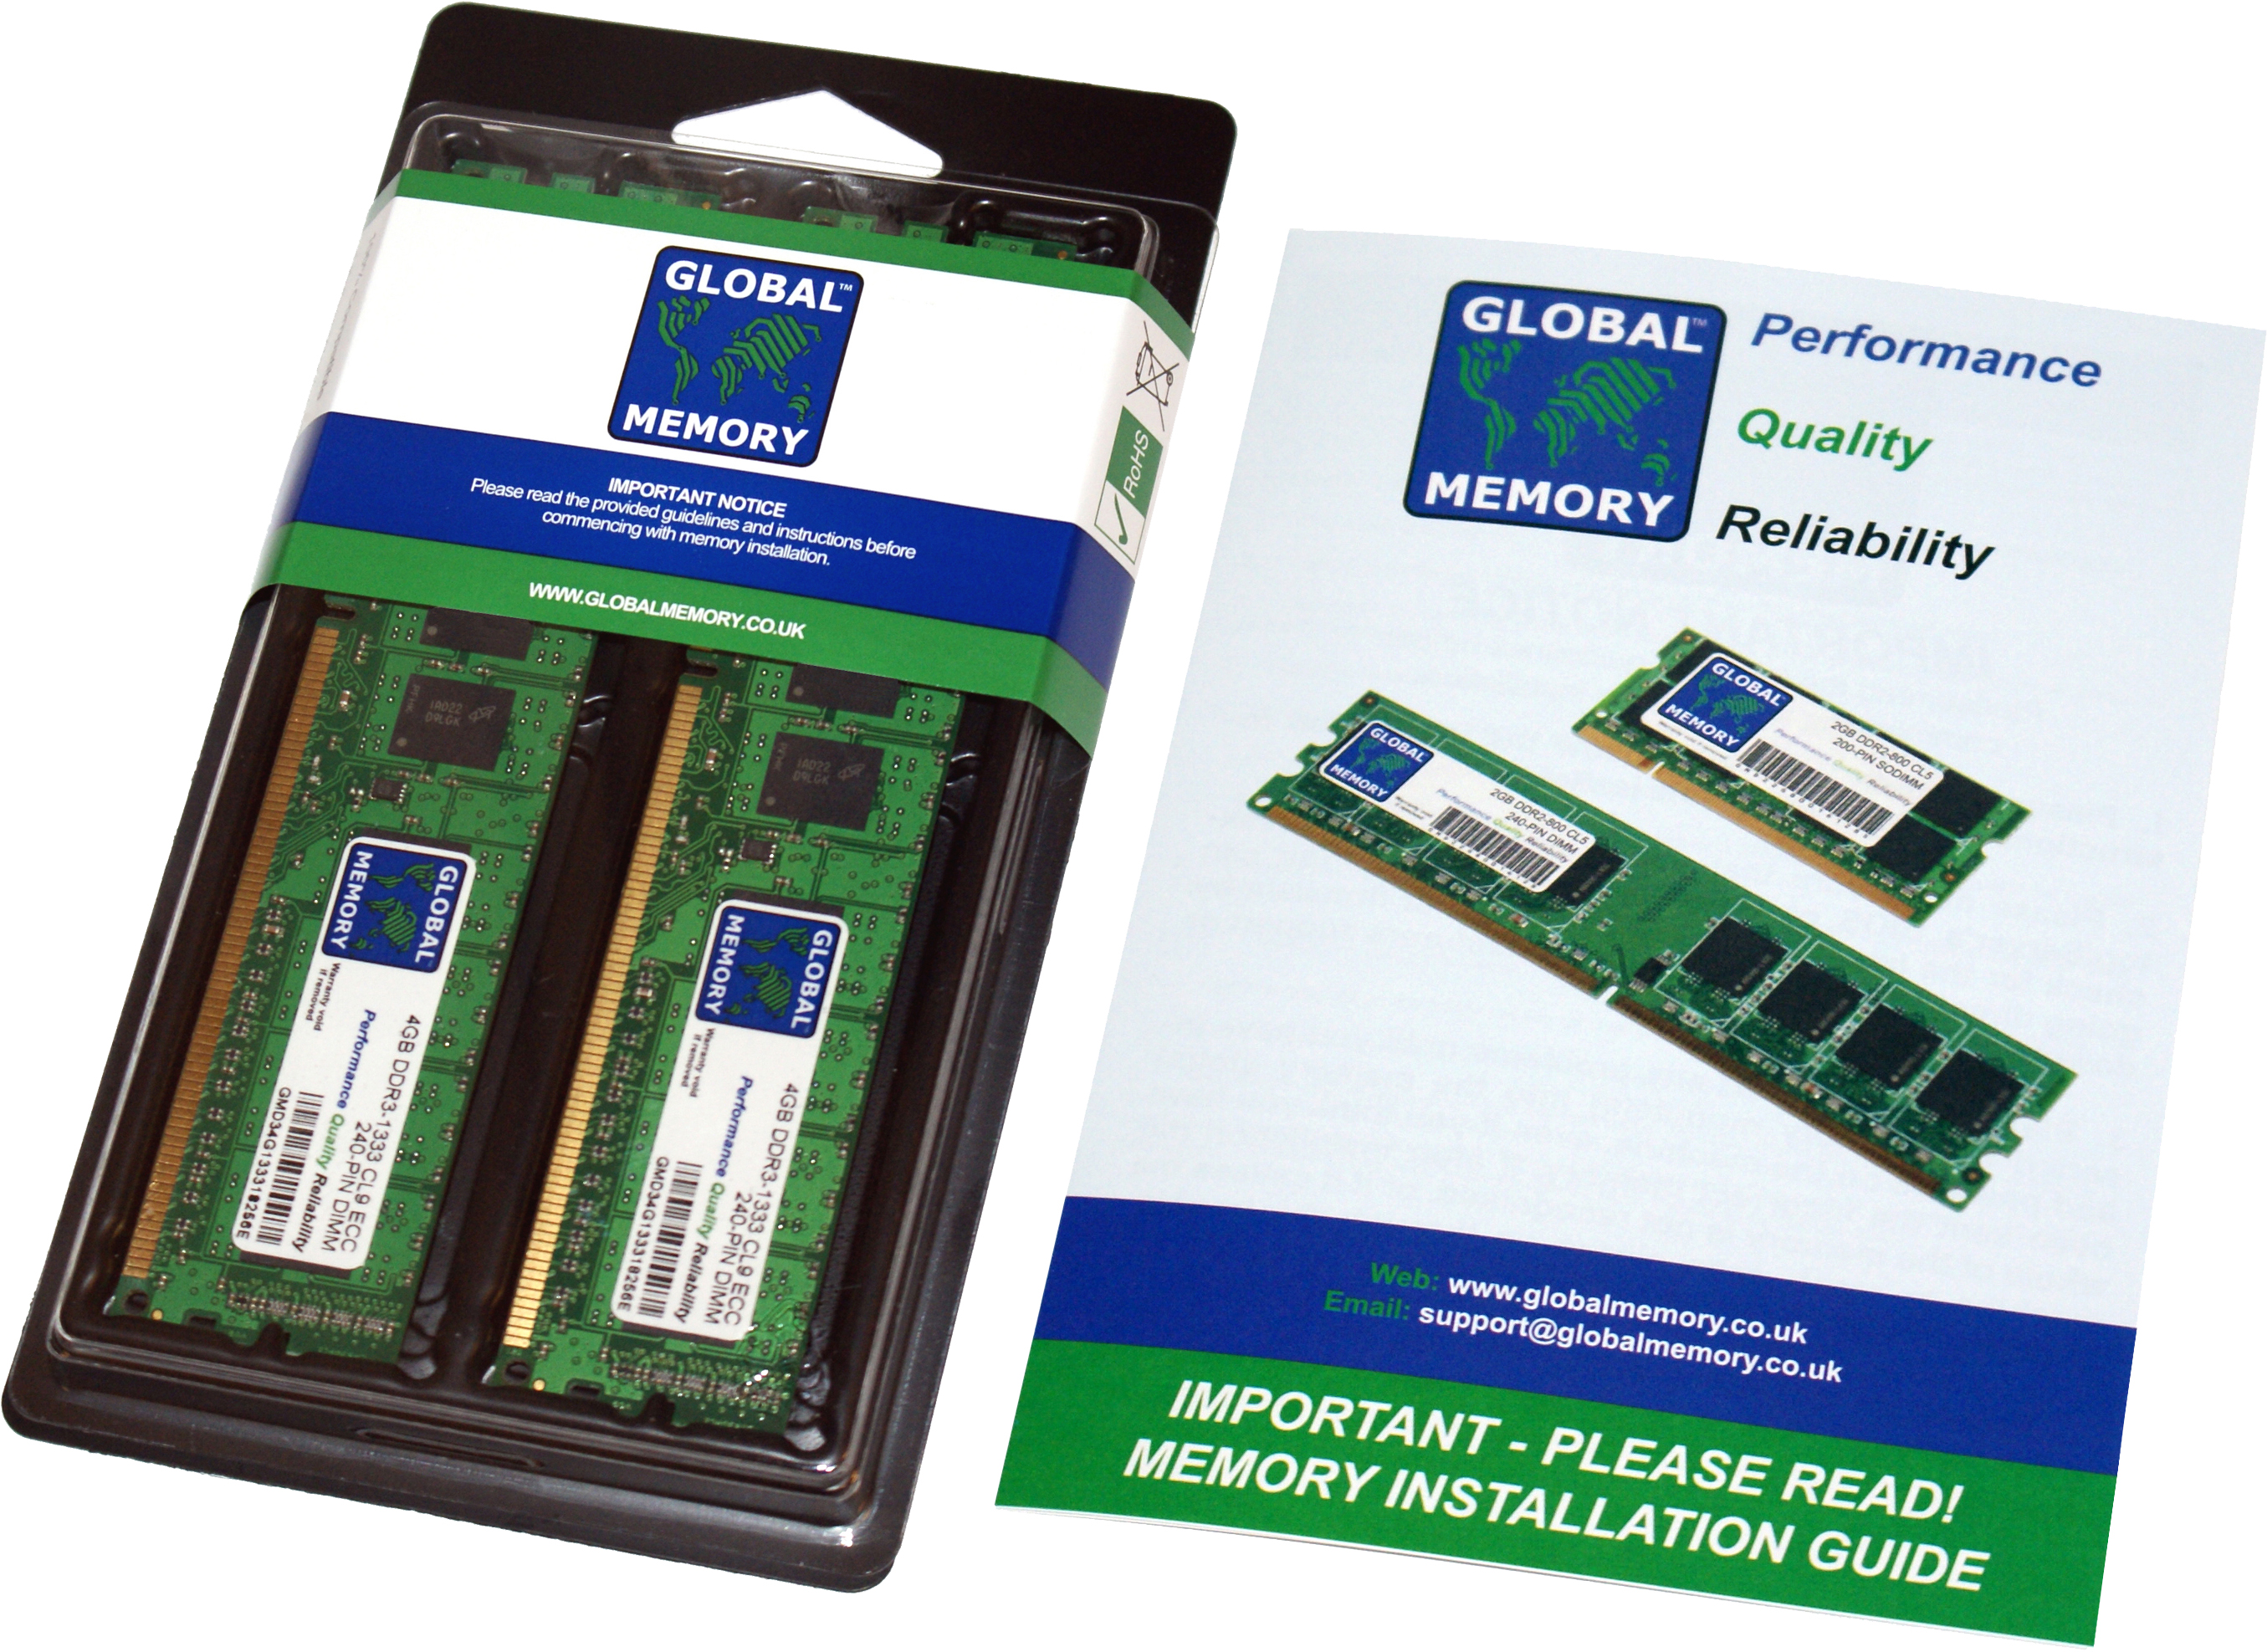 32GB (2 x 16GB) DDR4 2400MHz PC4-19200 288-PIN ECC DIMM (UDIMM) MEMORY RAM KIT FOR FUJITSU SERVERS/WORKSTATIONS